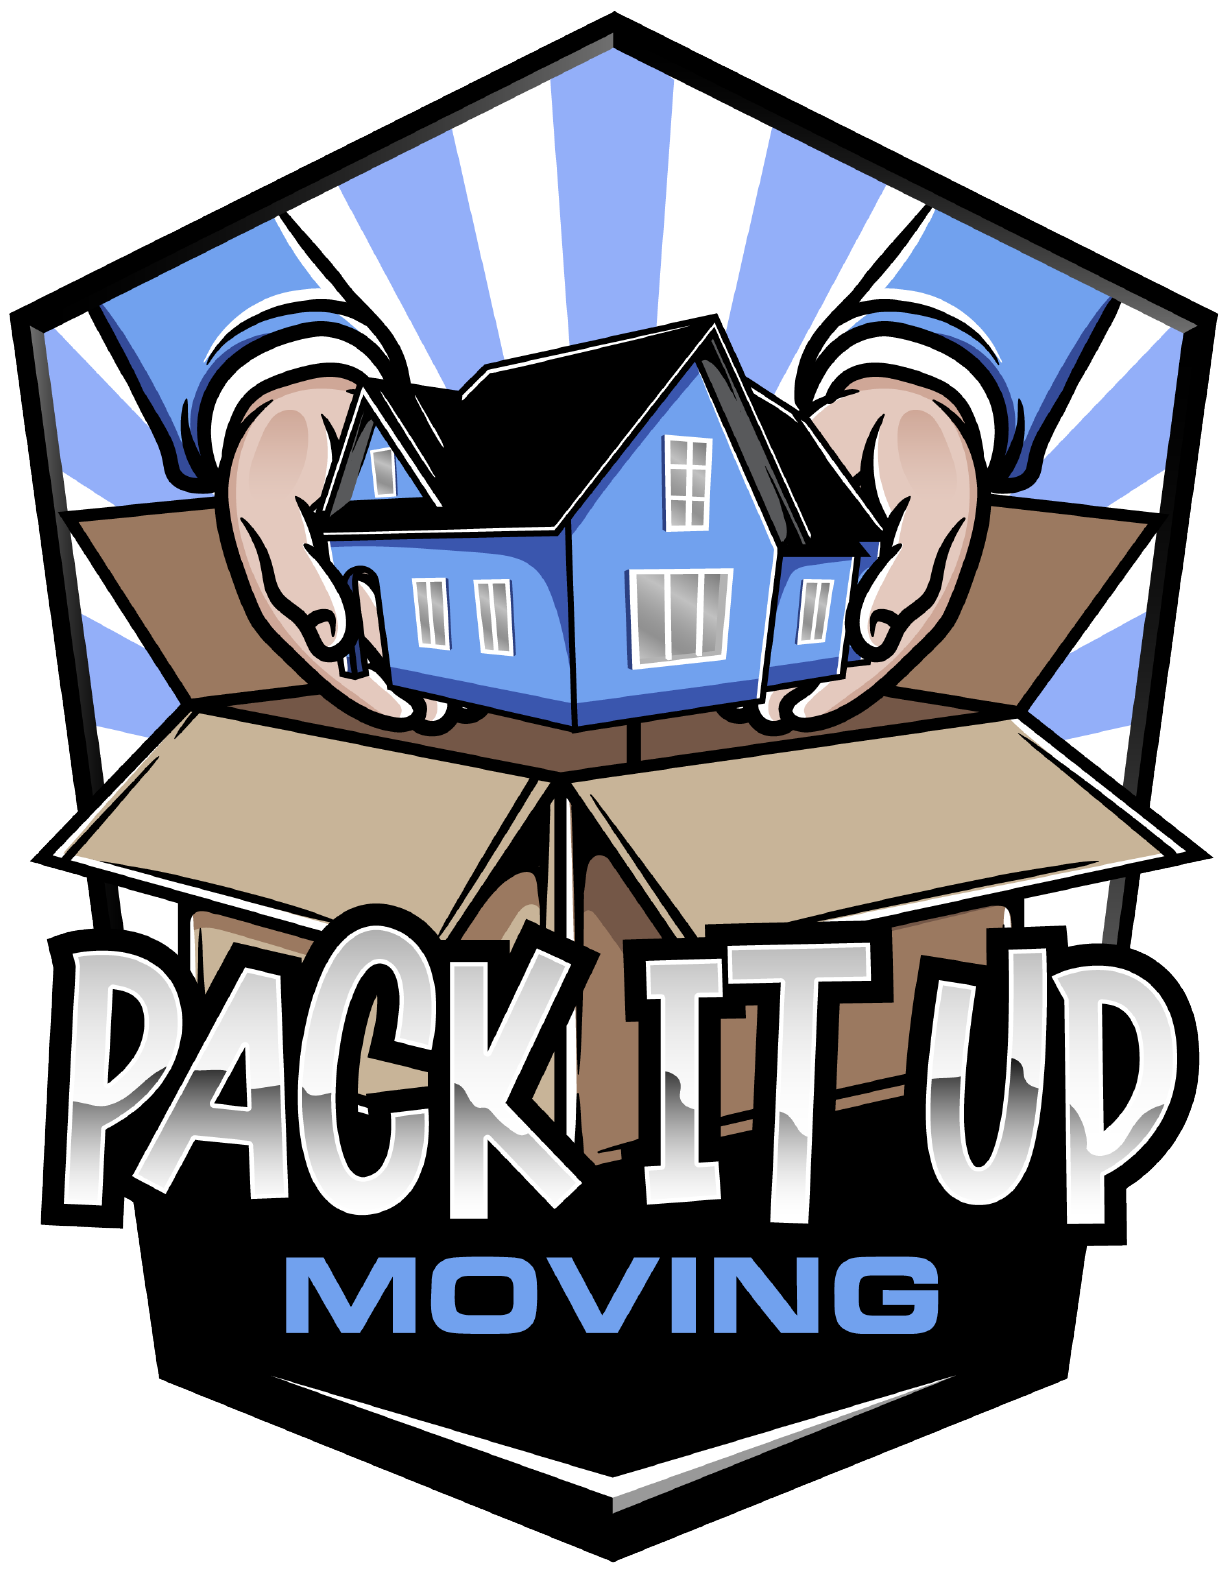 pack-it-up-moving_logo-black